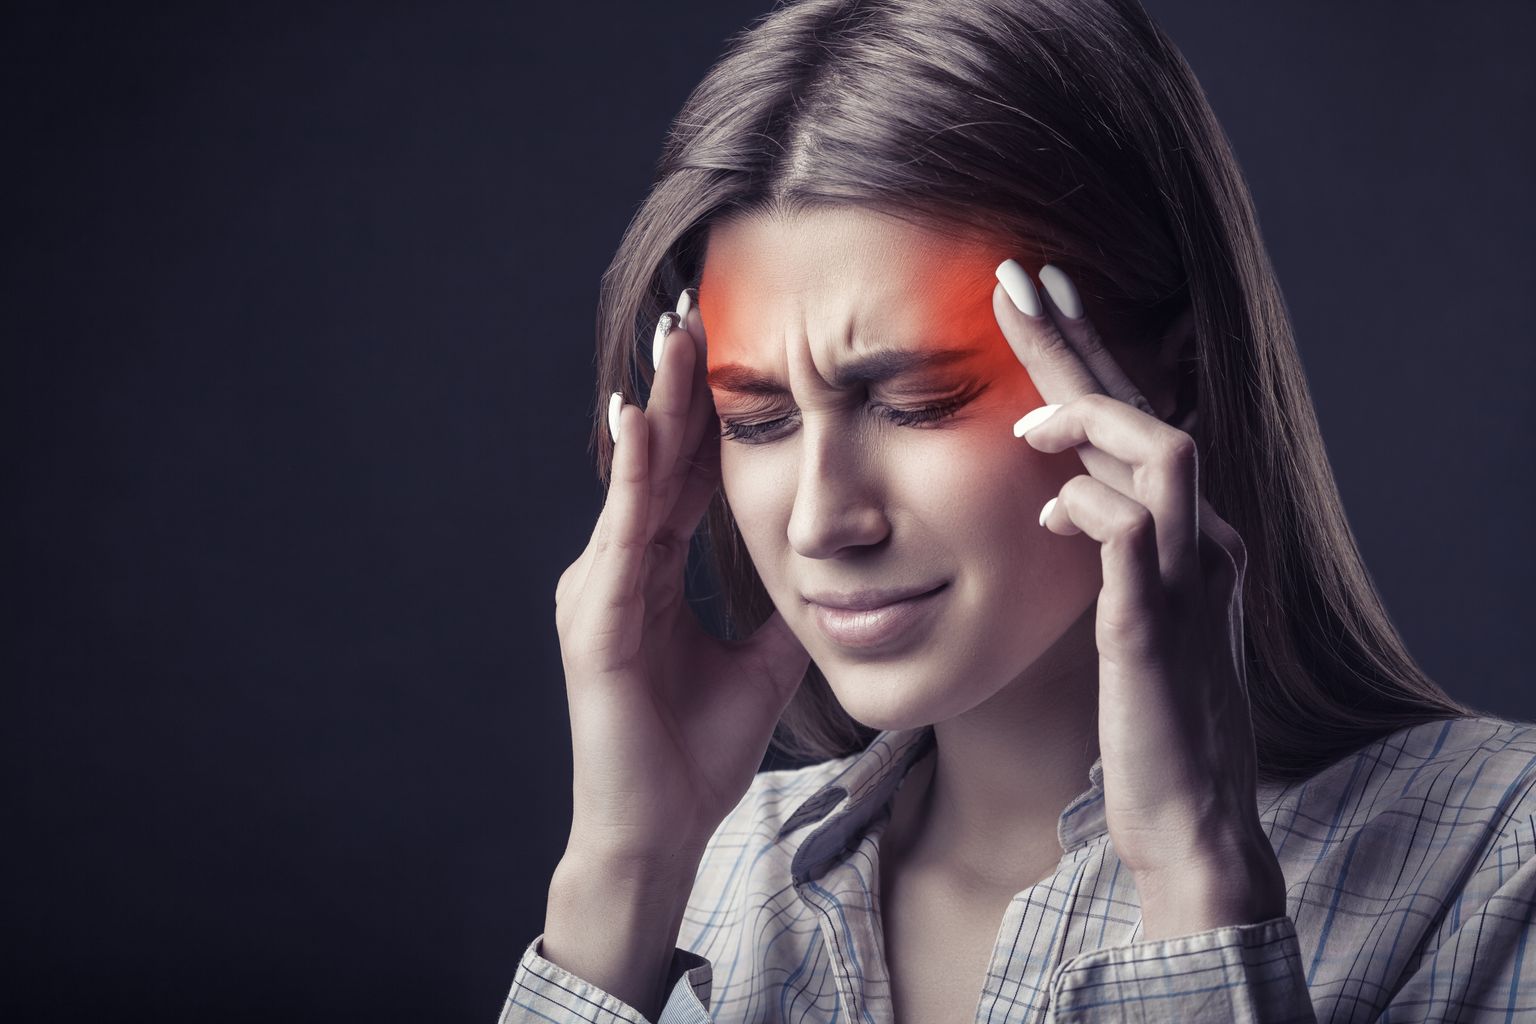 Young woman suffering from headache on dark background. Studio shot